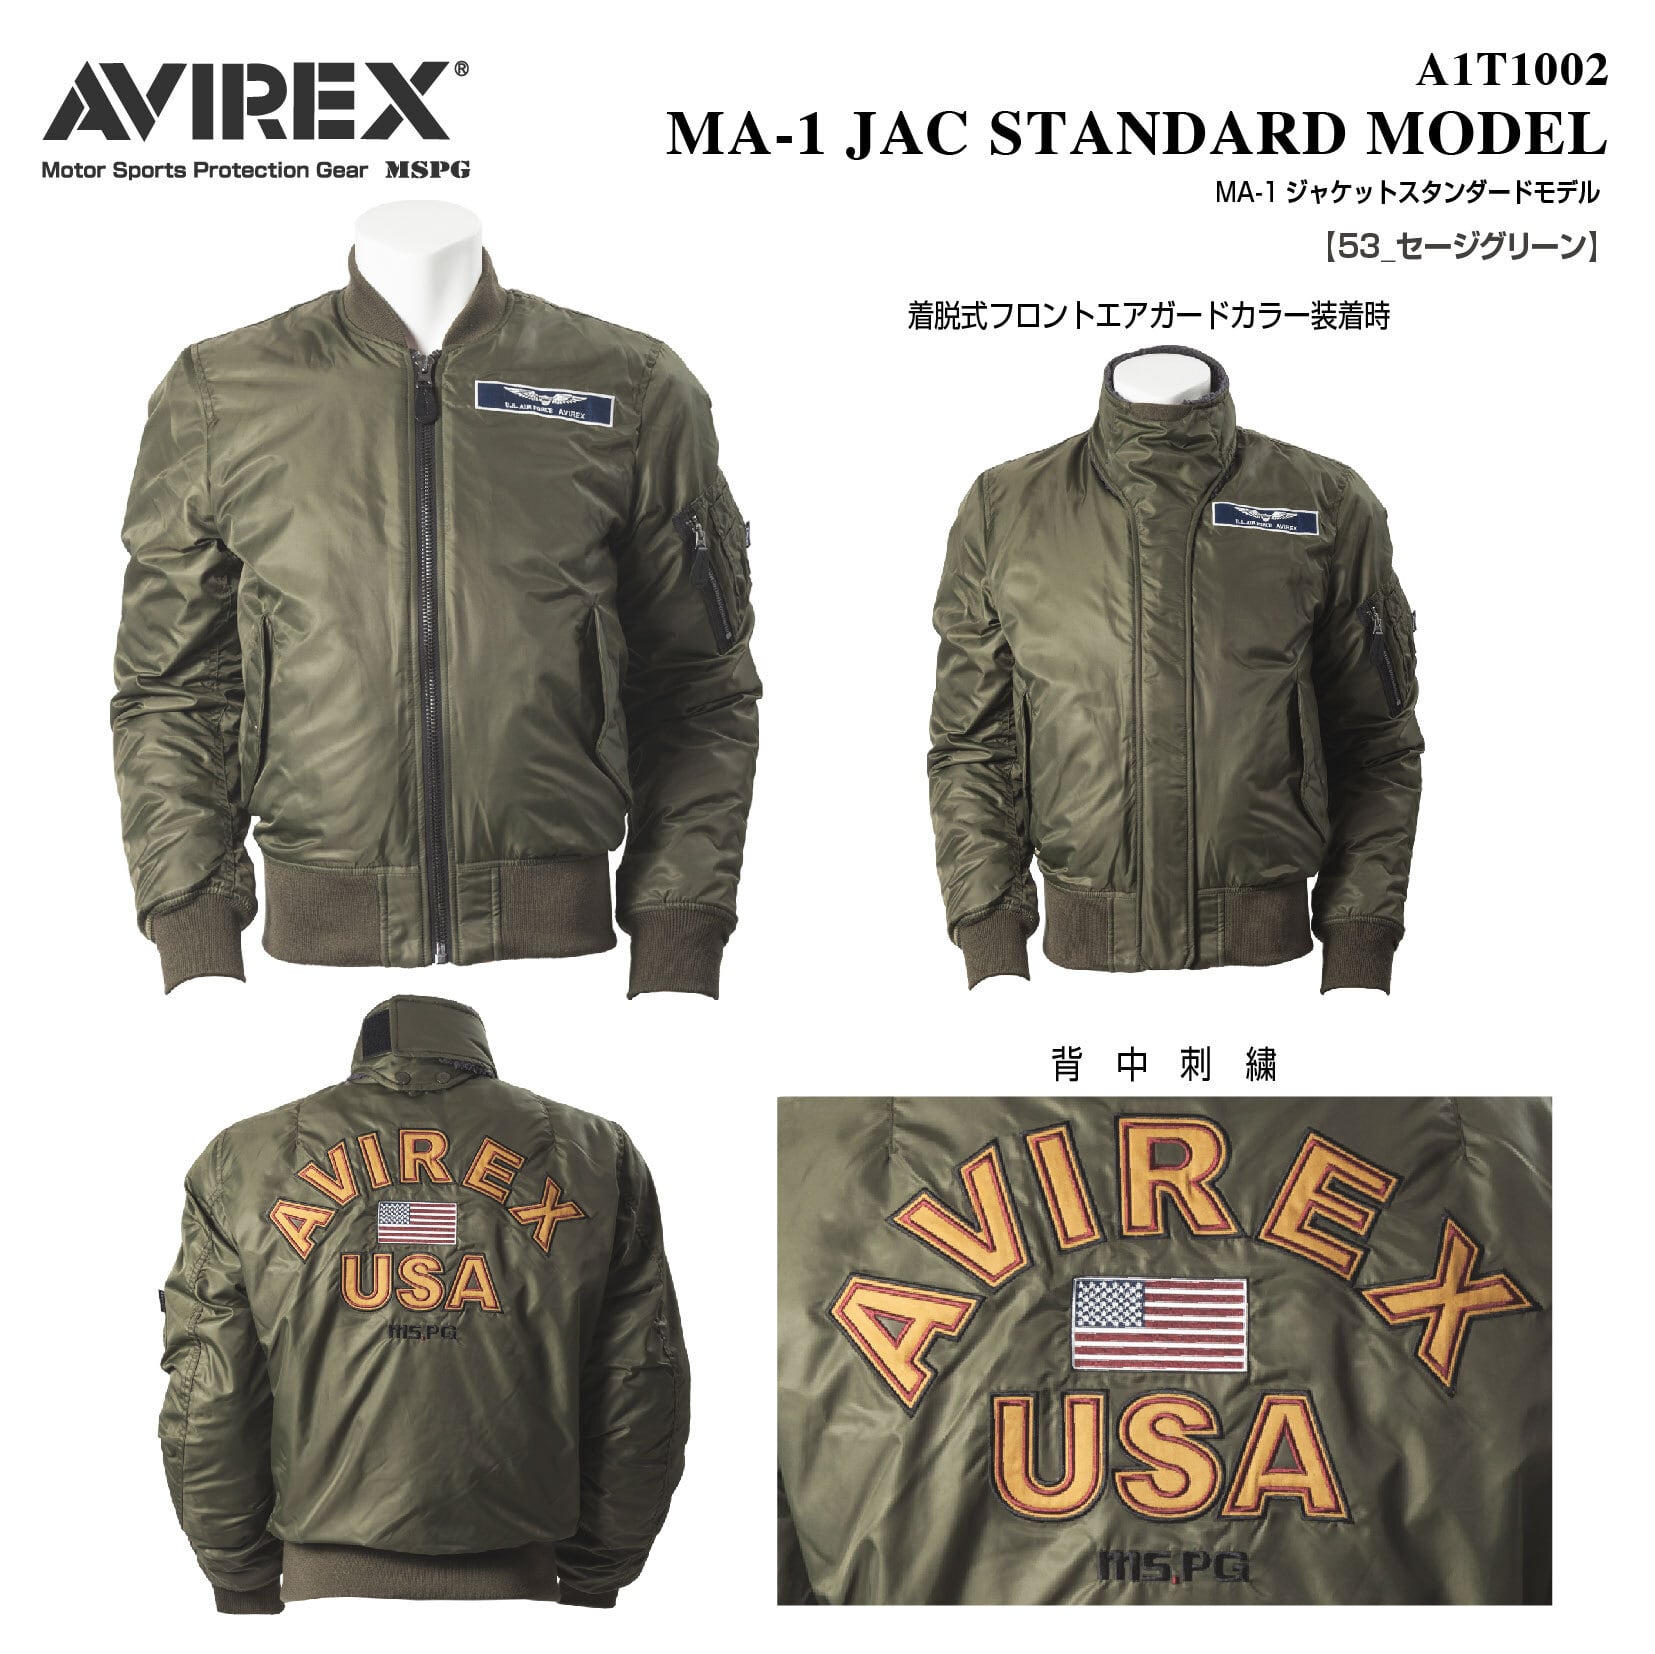 A1T1002 AVIREX MA-1 JAC STANDARD MODEL アビレックス ライディング